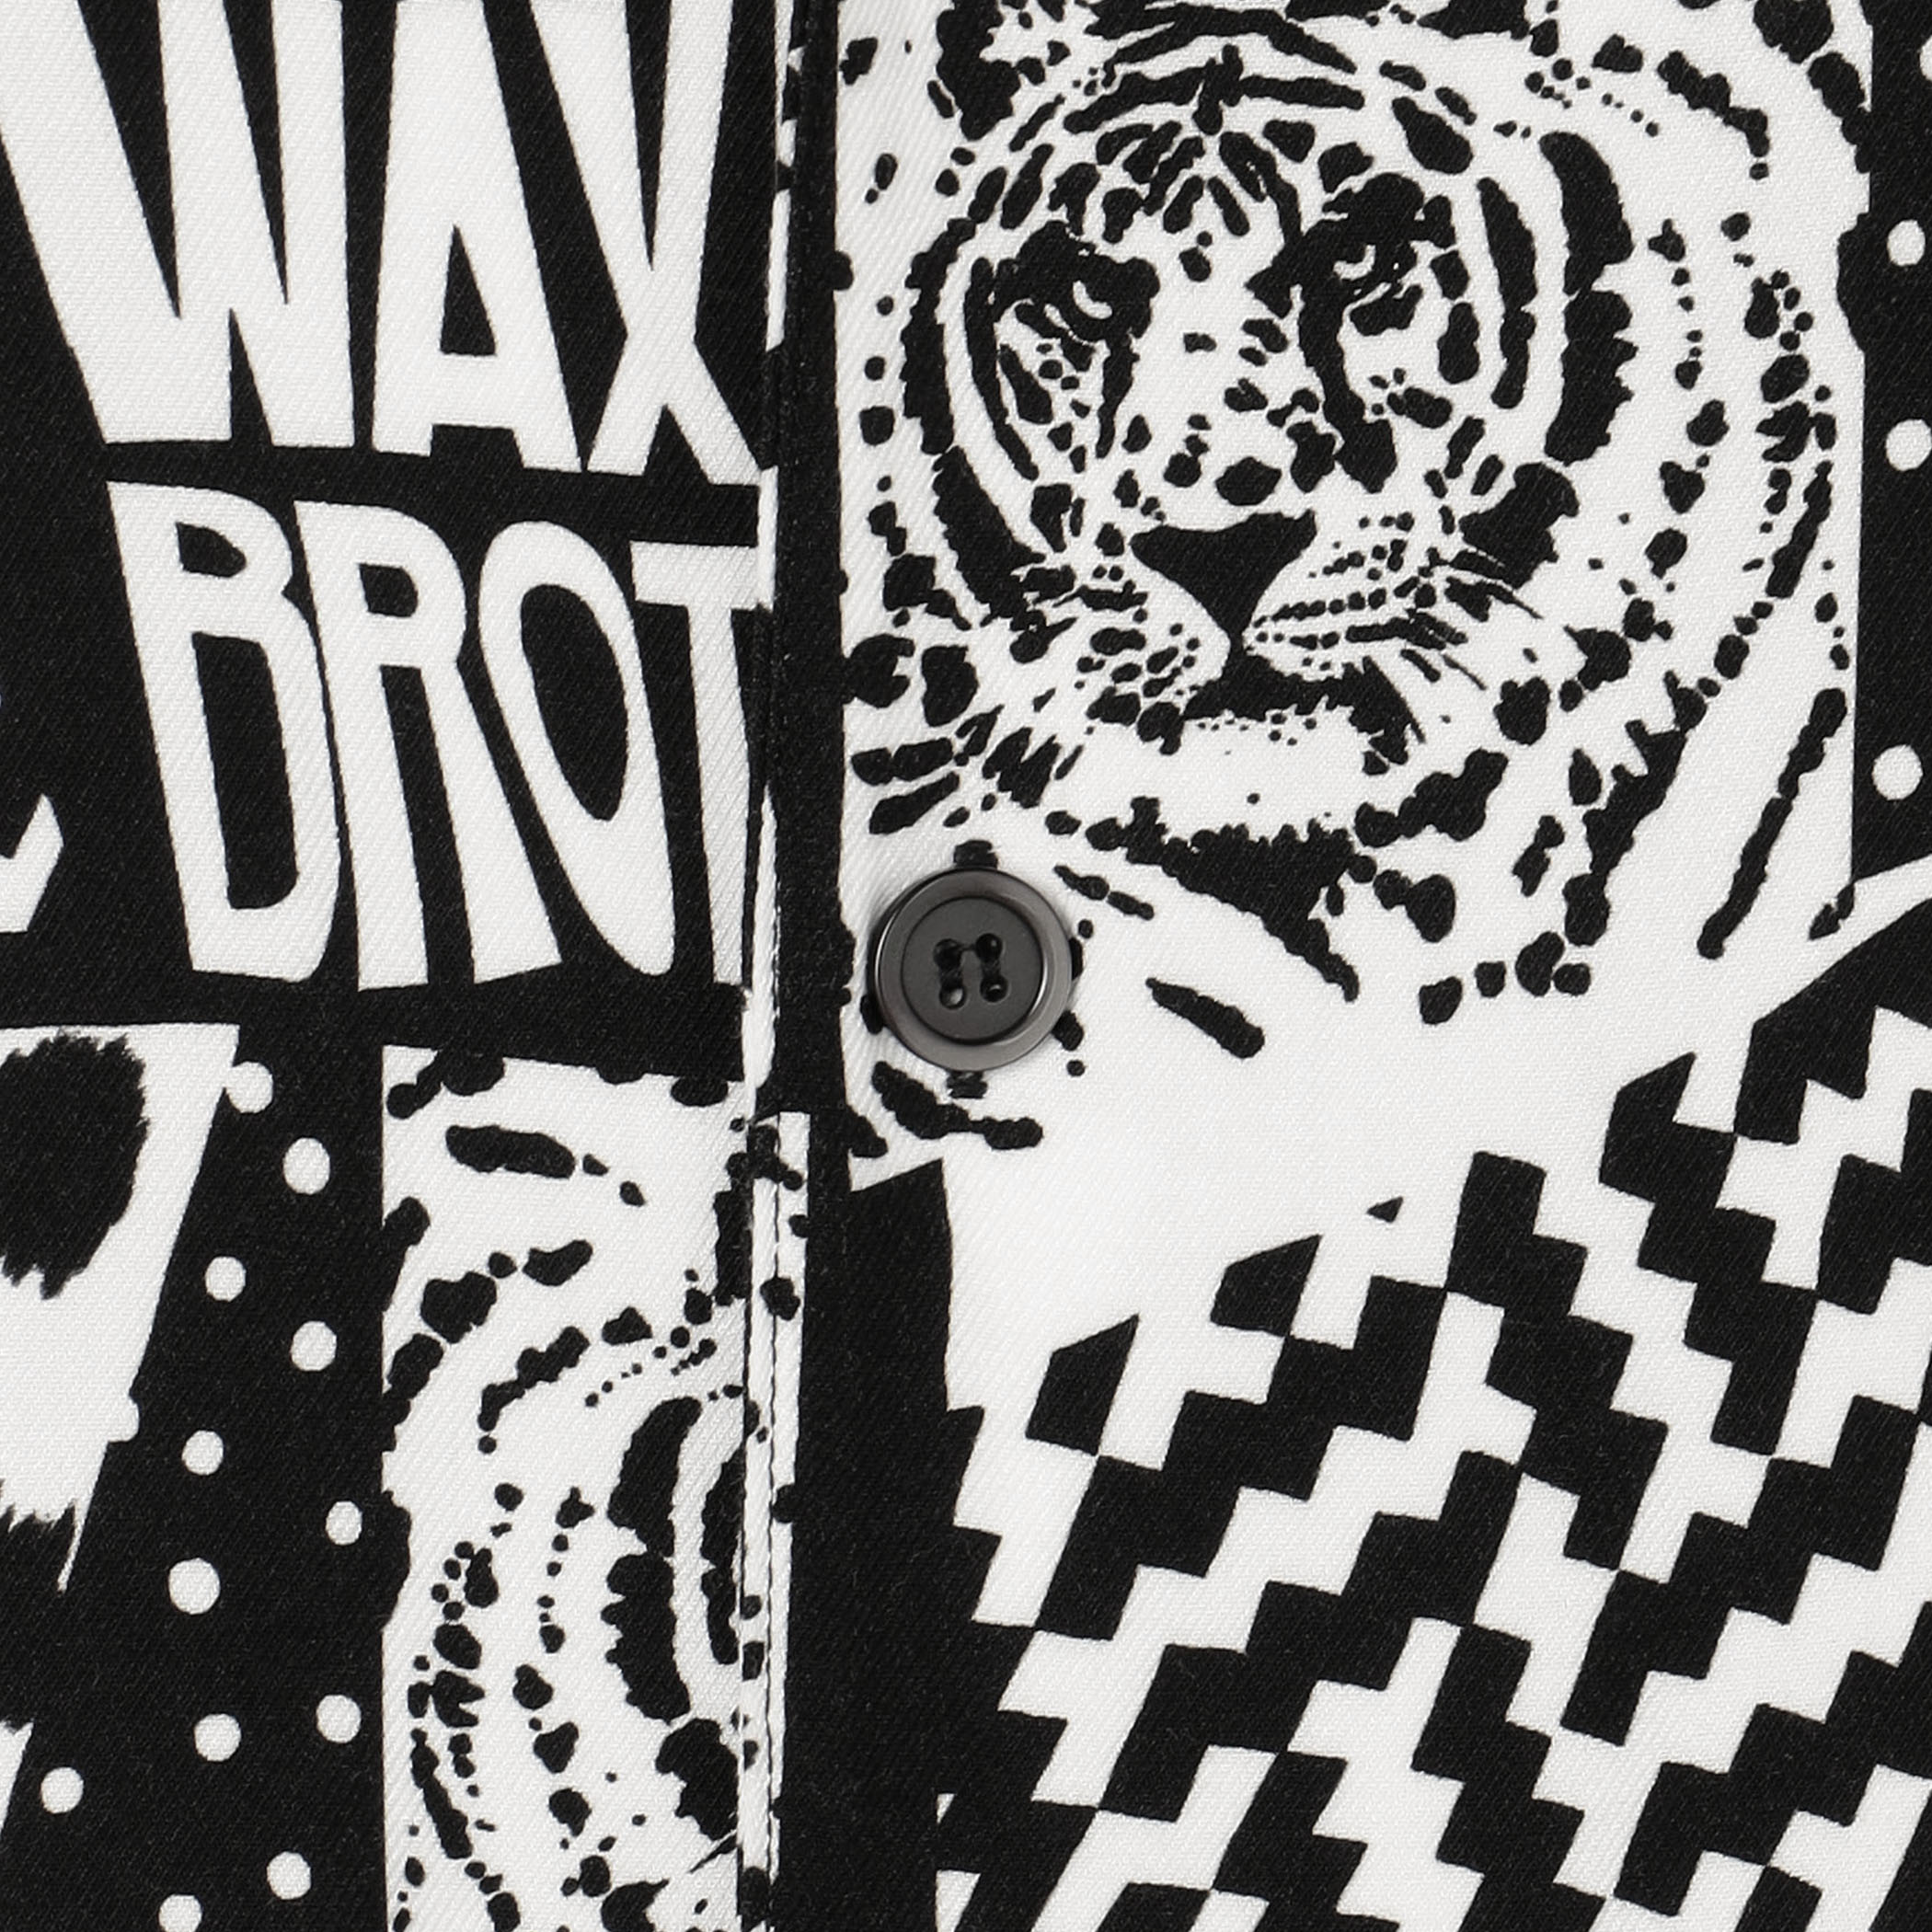 Shirts Waxman Brothers - Waxman Brother Lyrics Shirt - 5000VI3060